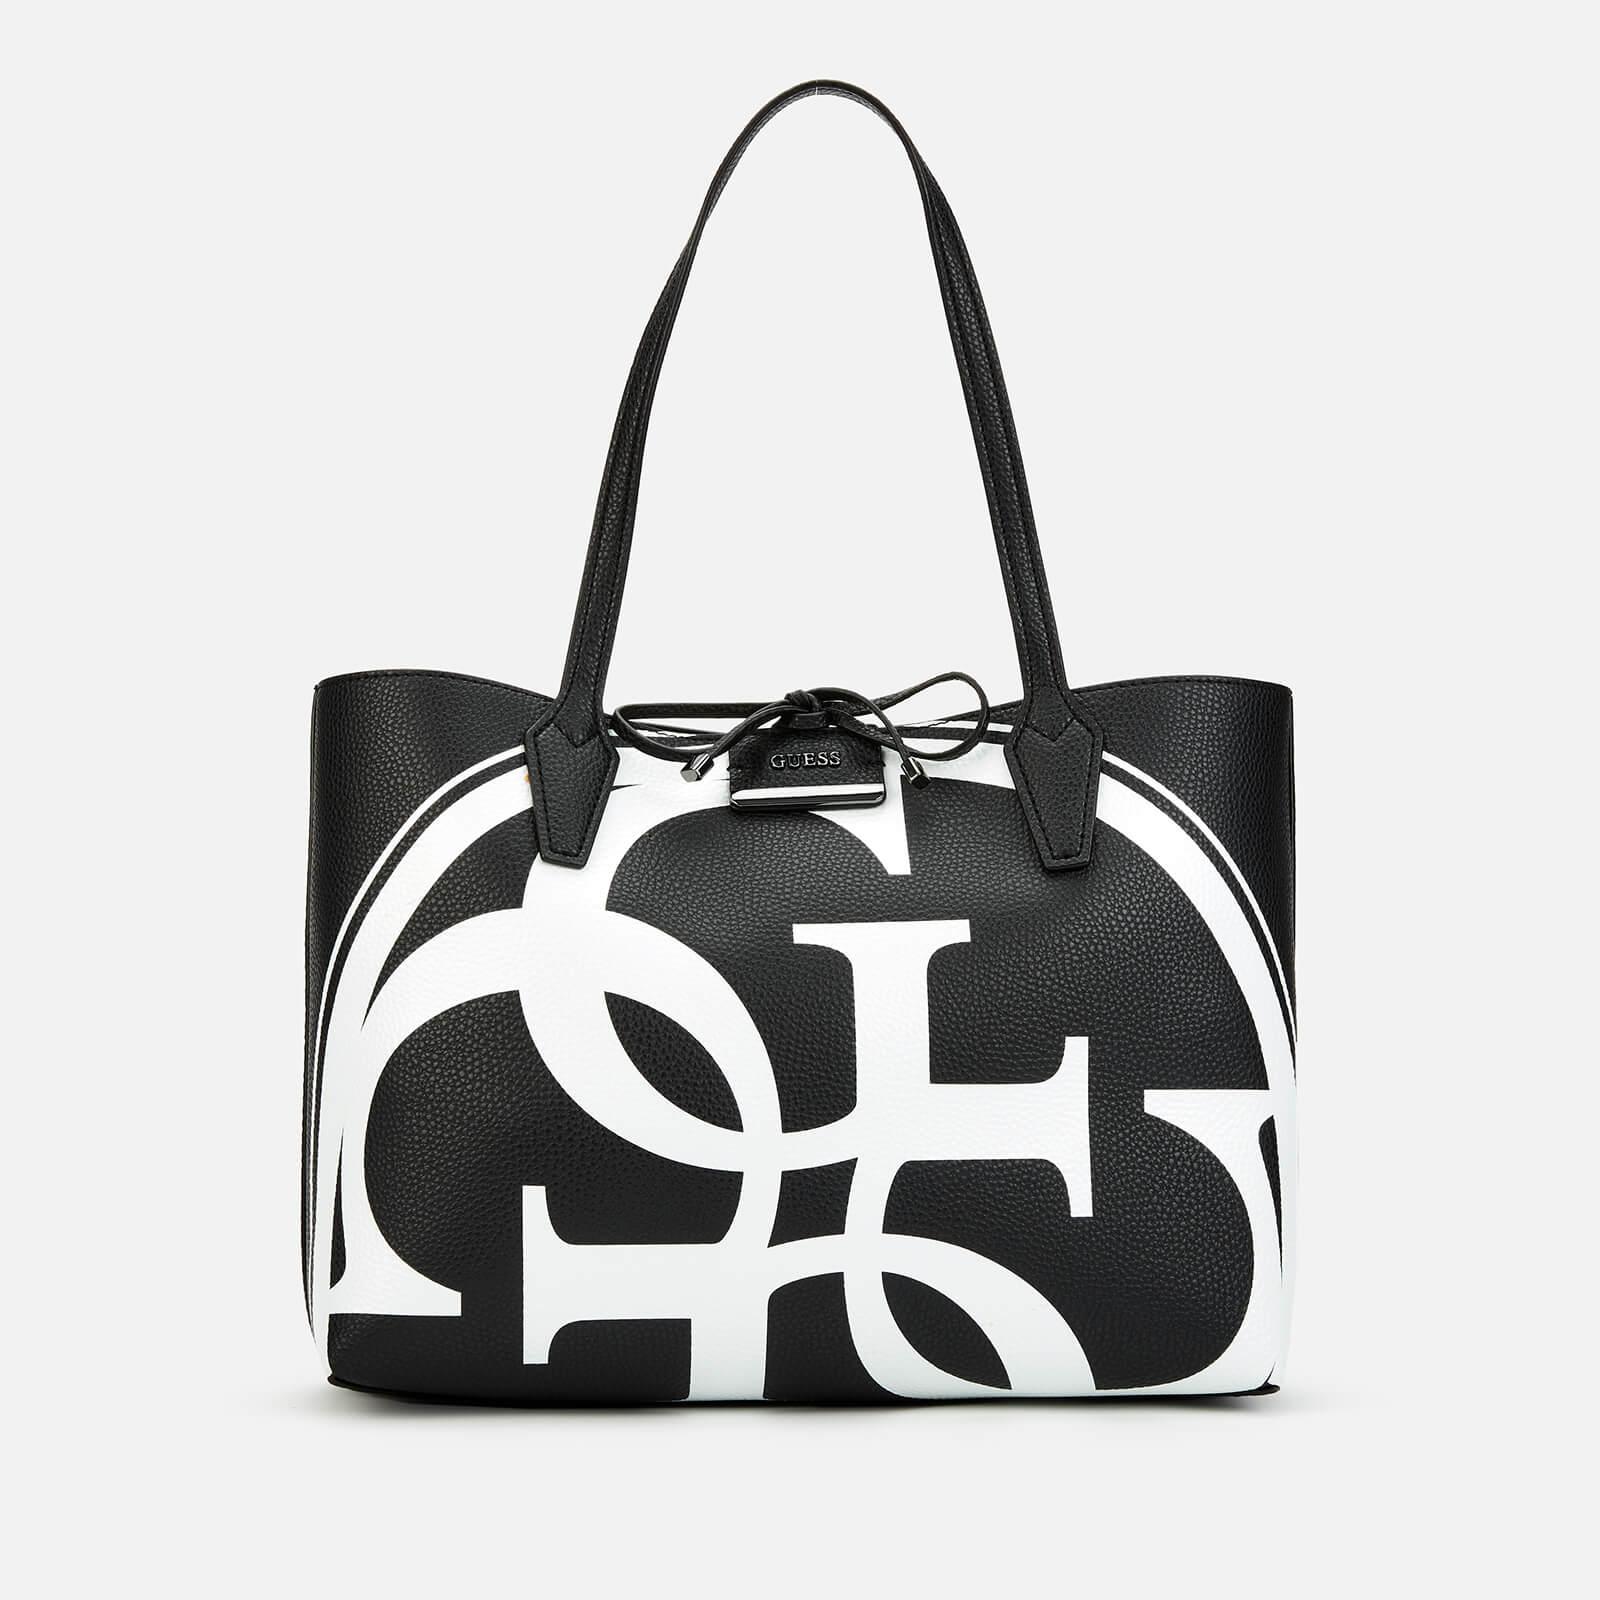 Guess Reversible Bobbi Logo Tote Bag in Black / White (Black) - Lyst